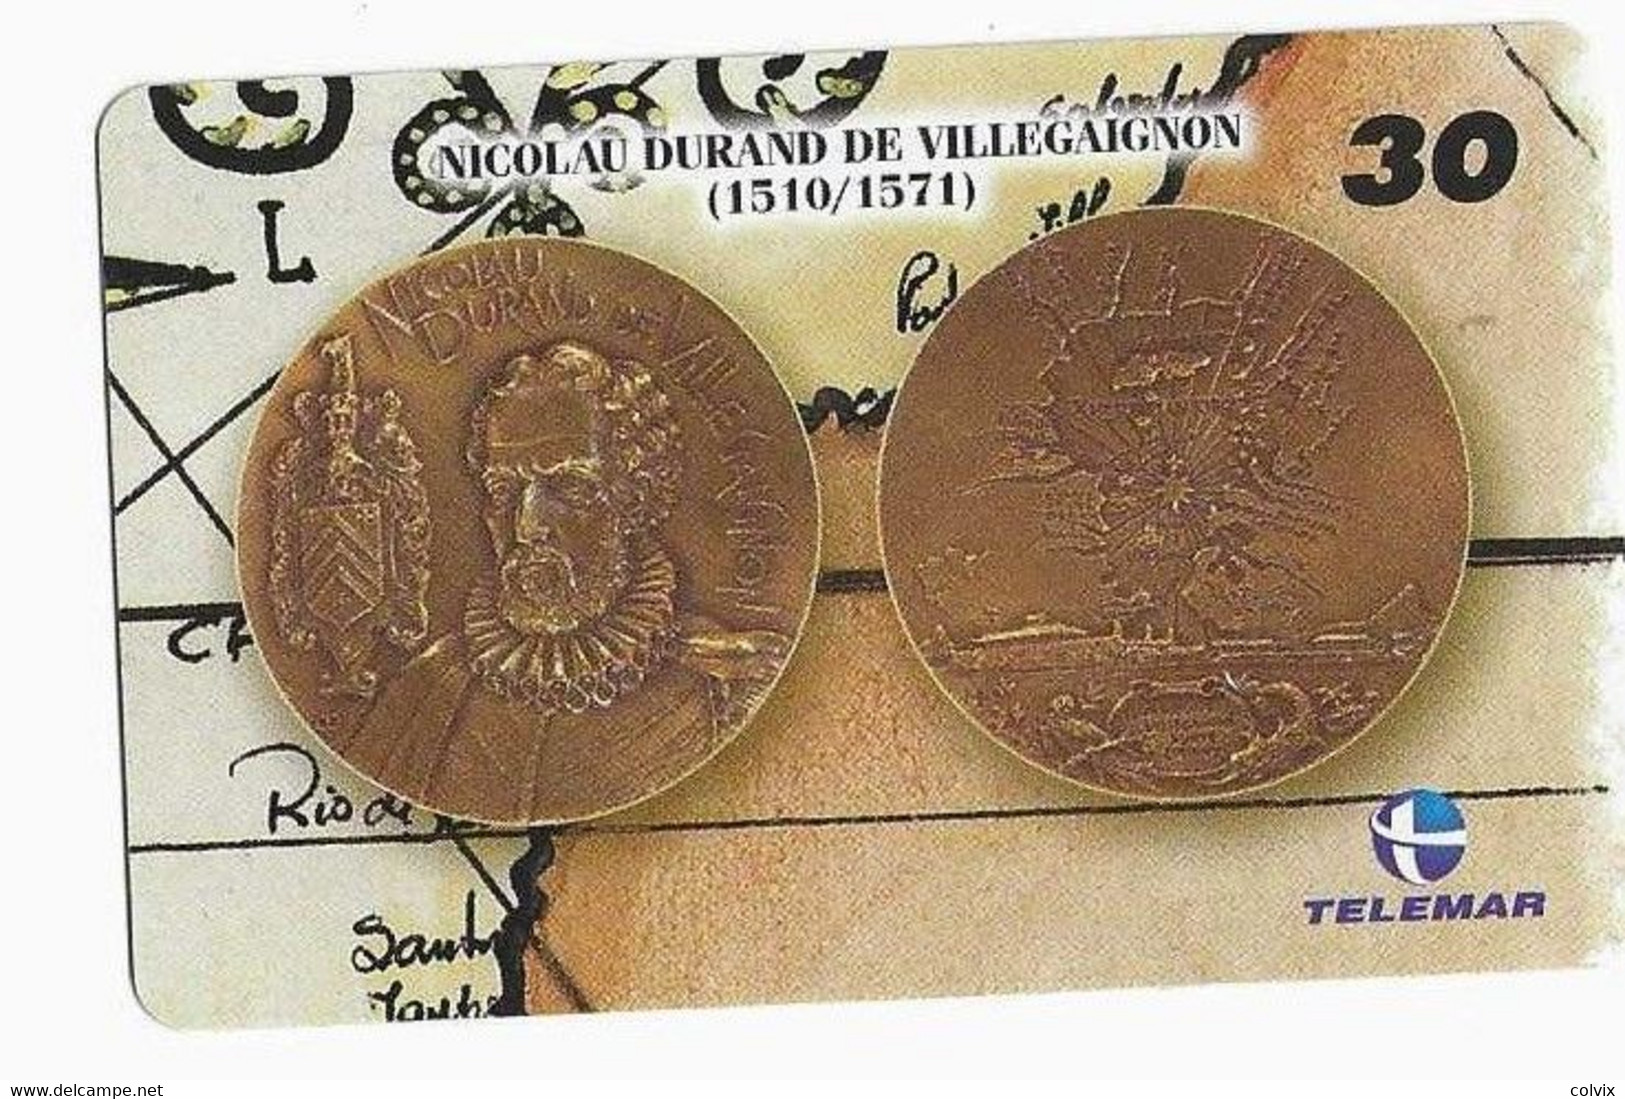 BRESIL TELECARTE MONNAIE NICOLAU DURAND DE VILLEGAIGNON - Stamps & Coins